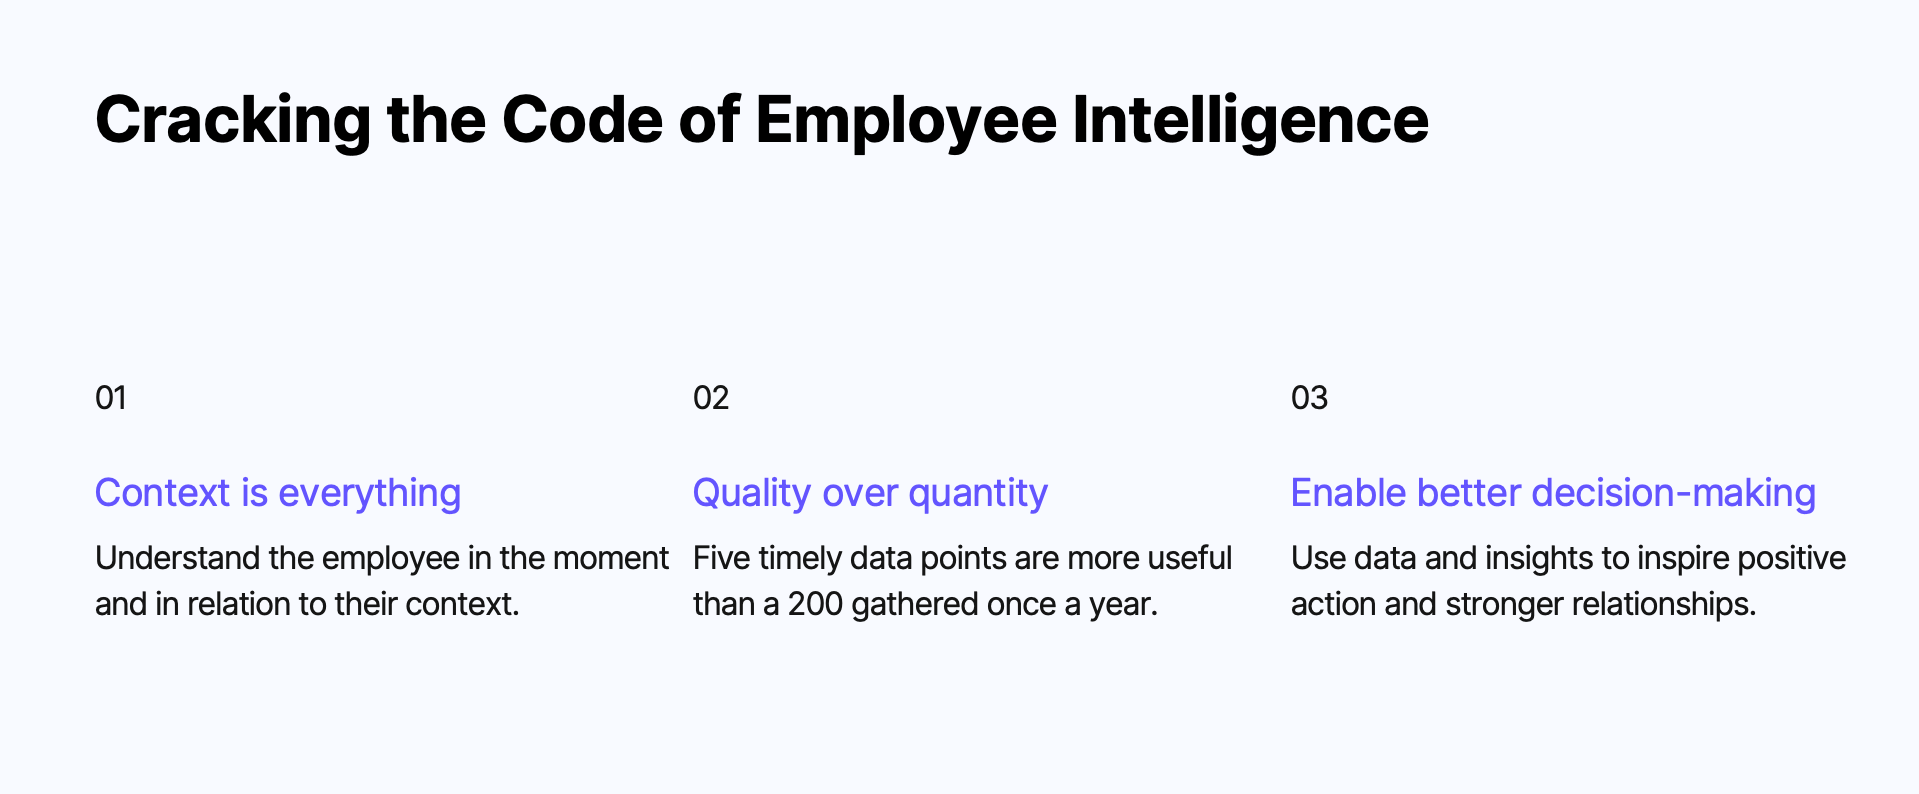 Cracking the code of employee intelligence